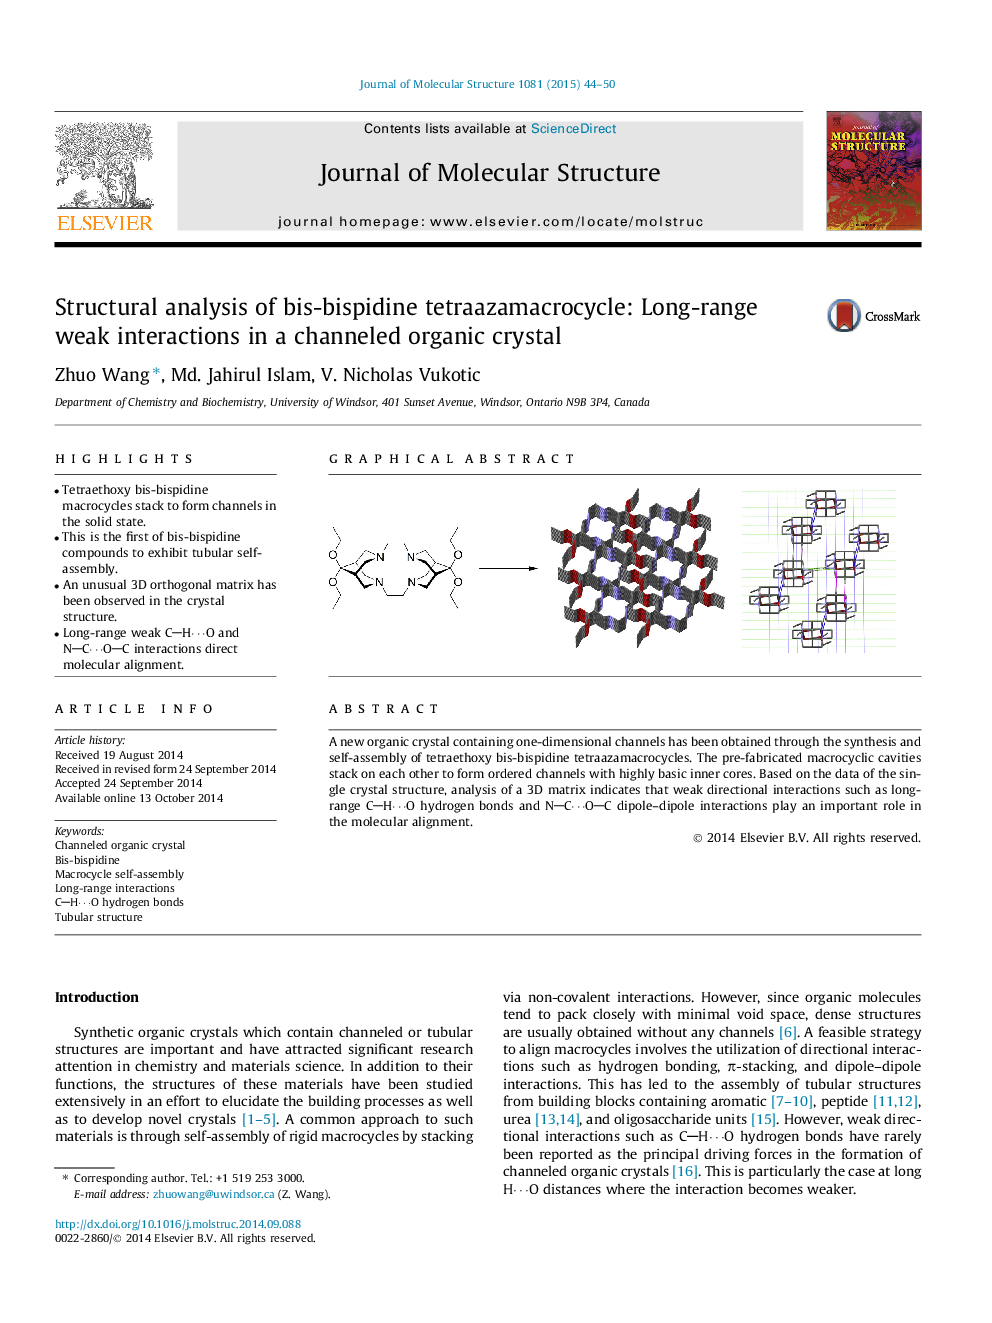 Structural analysis of bis-bispidine tetraazamacrocycle: Long-range weak interactions in a channeled organic crystal